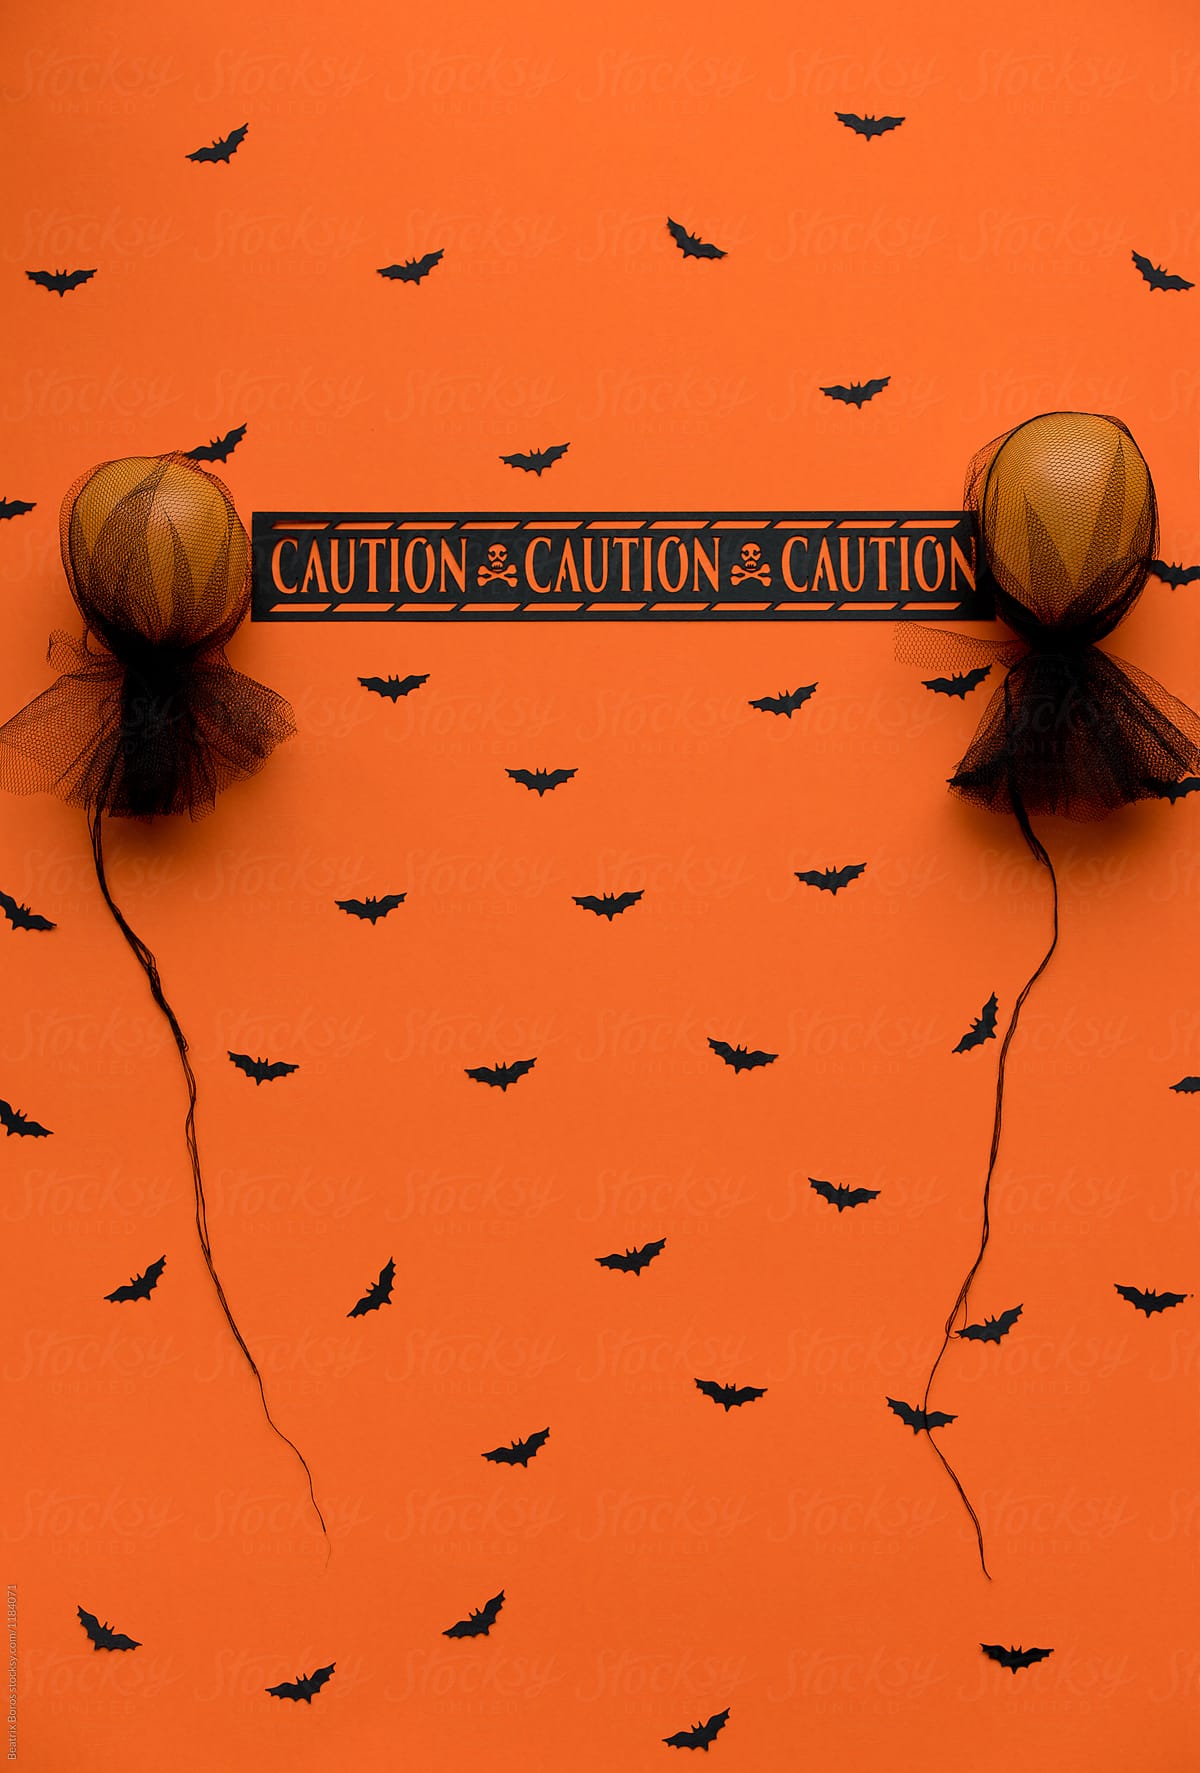 Halloween warning message between 2 orange balloons on a bat pattern